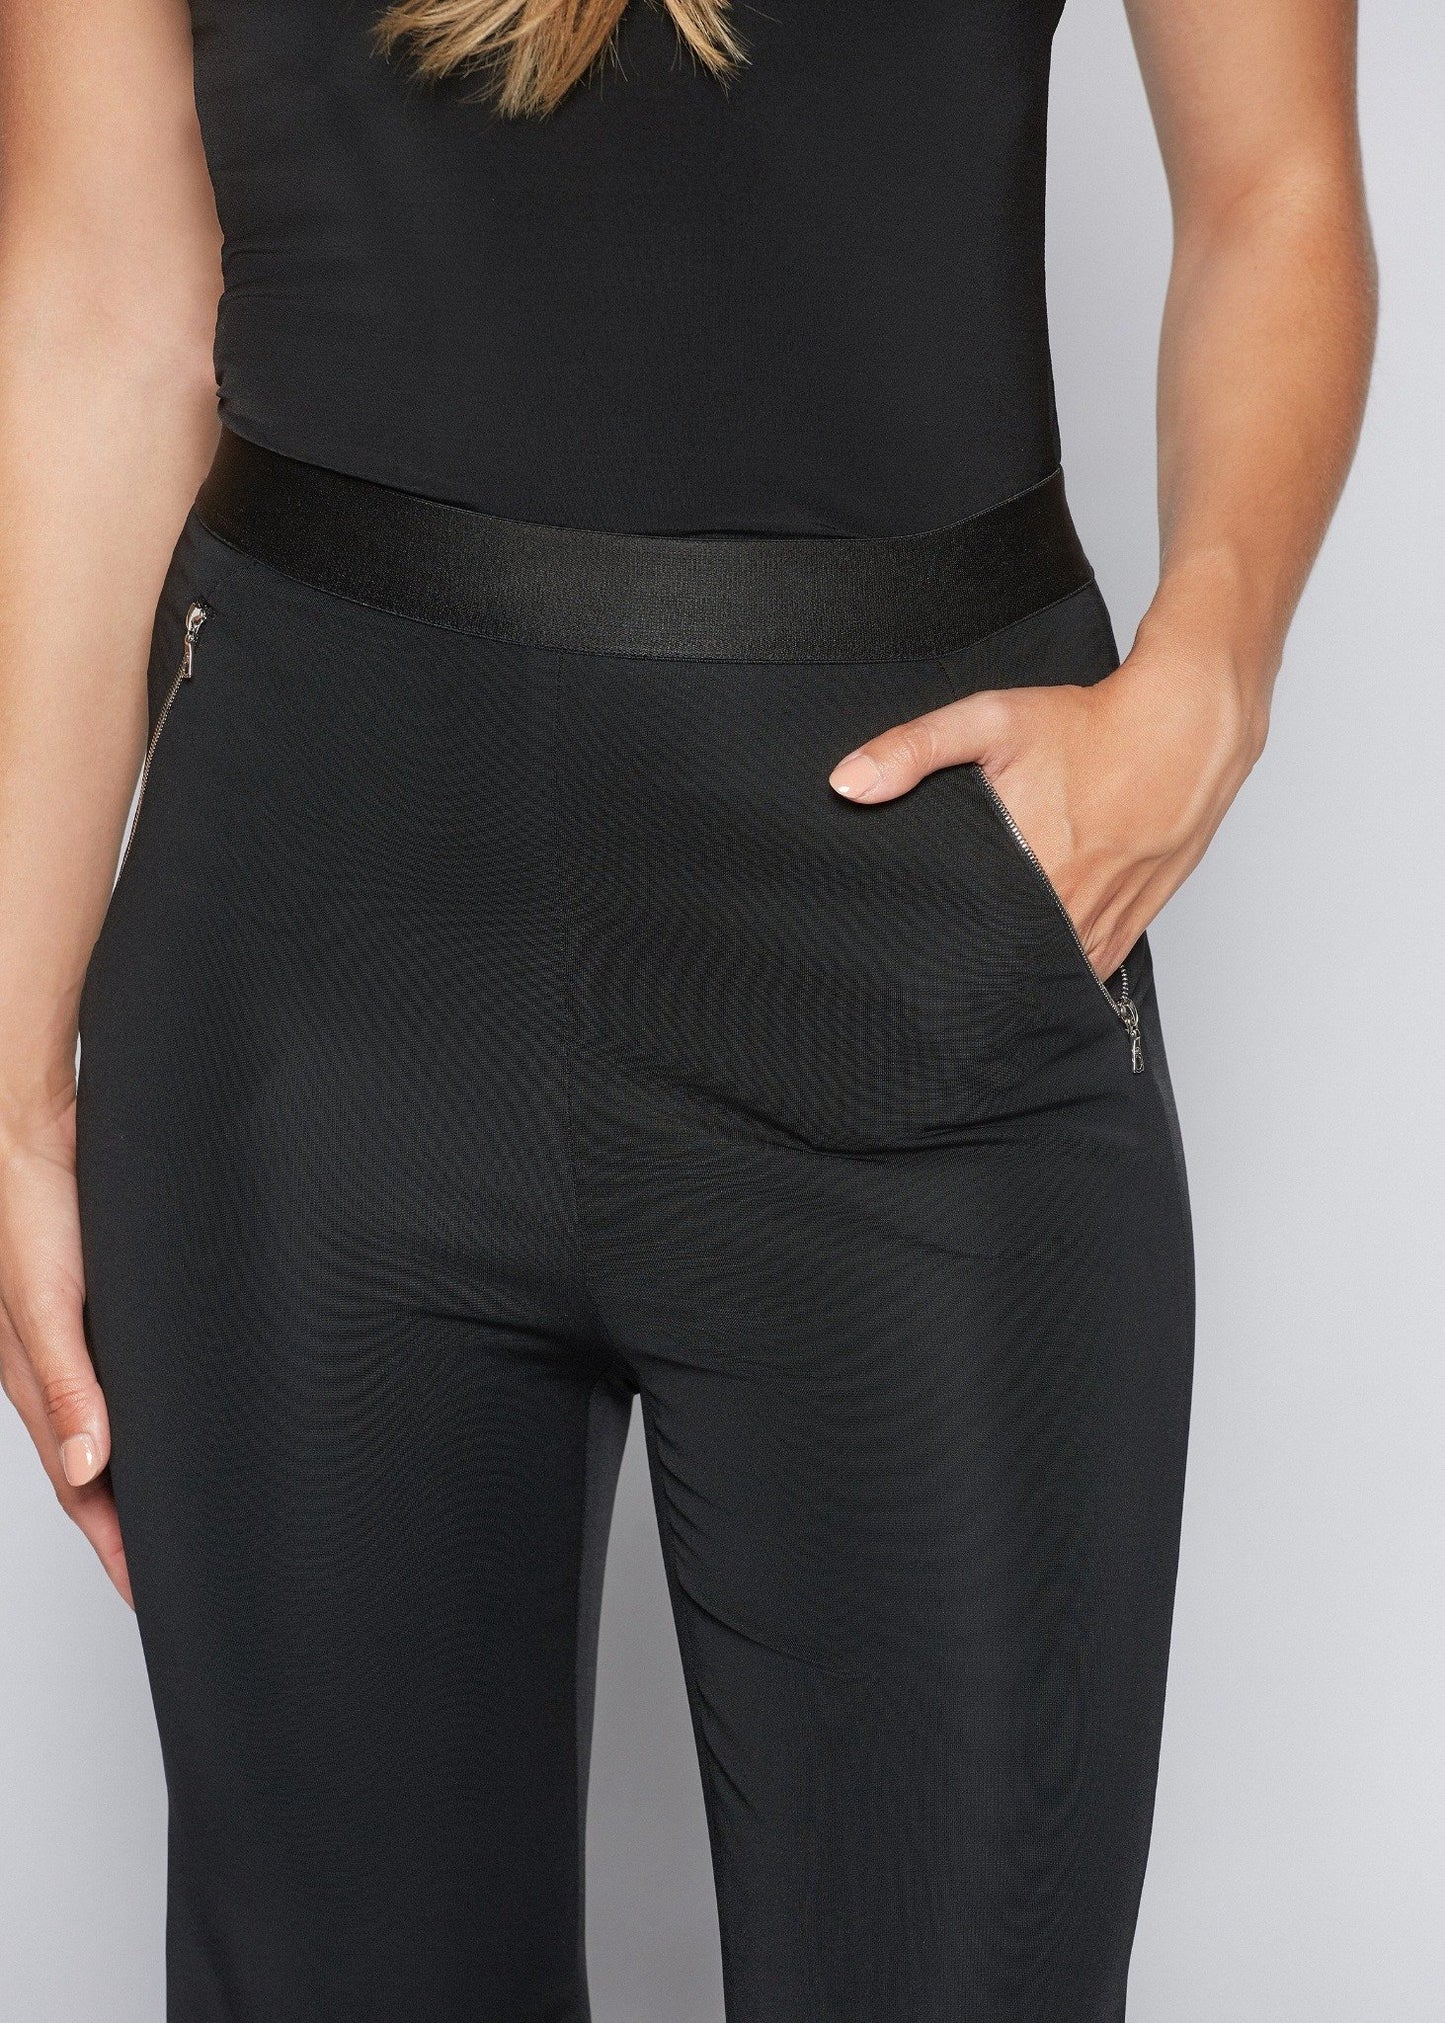 Kara trousers black front detail view. 